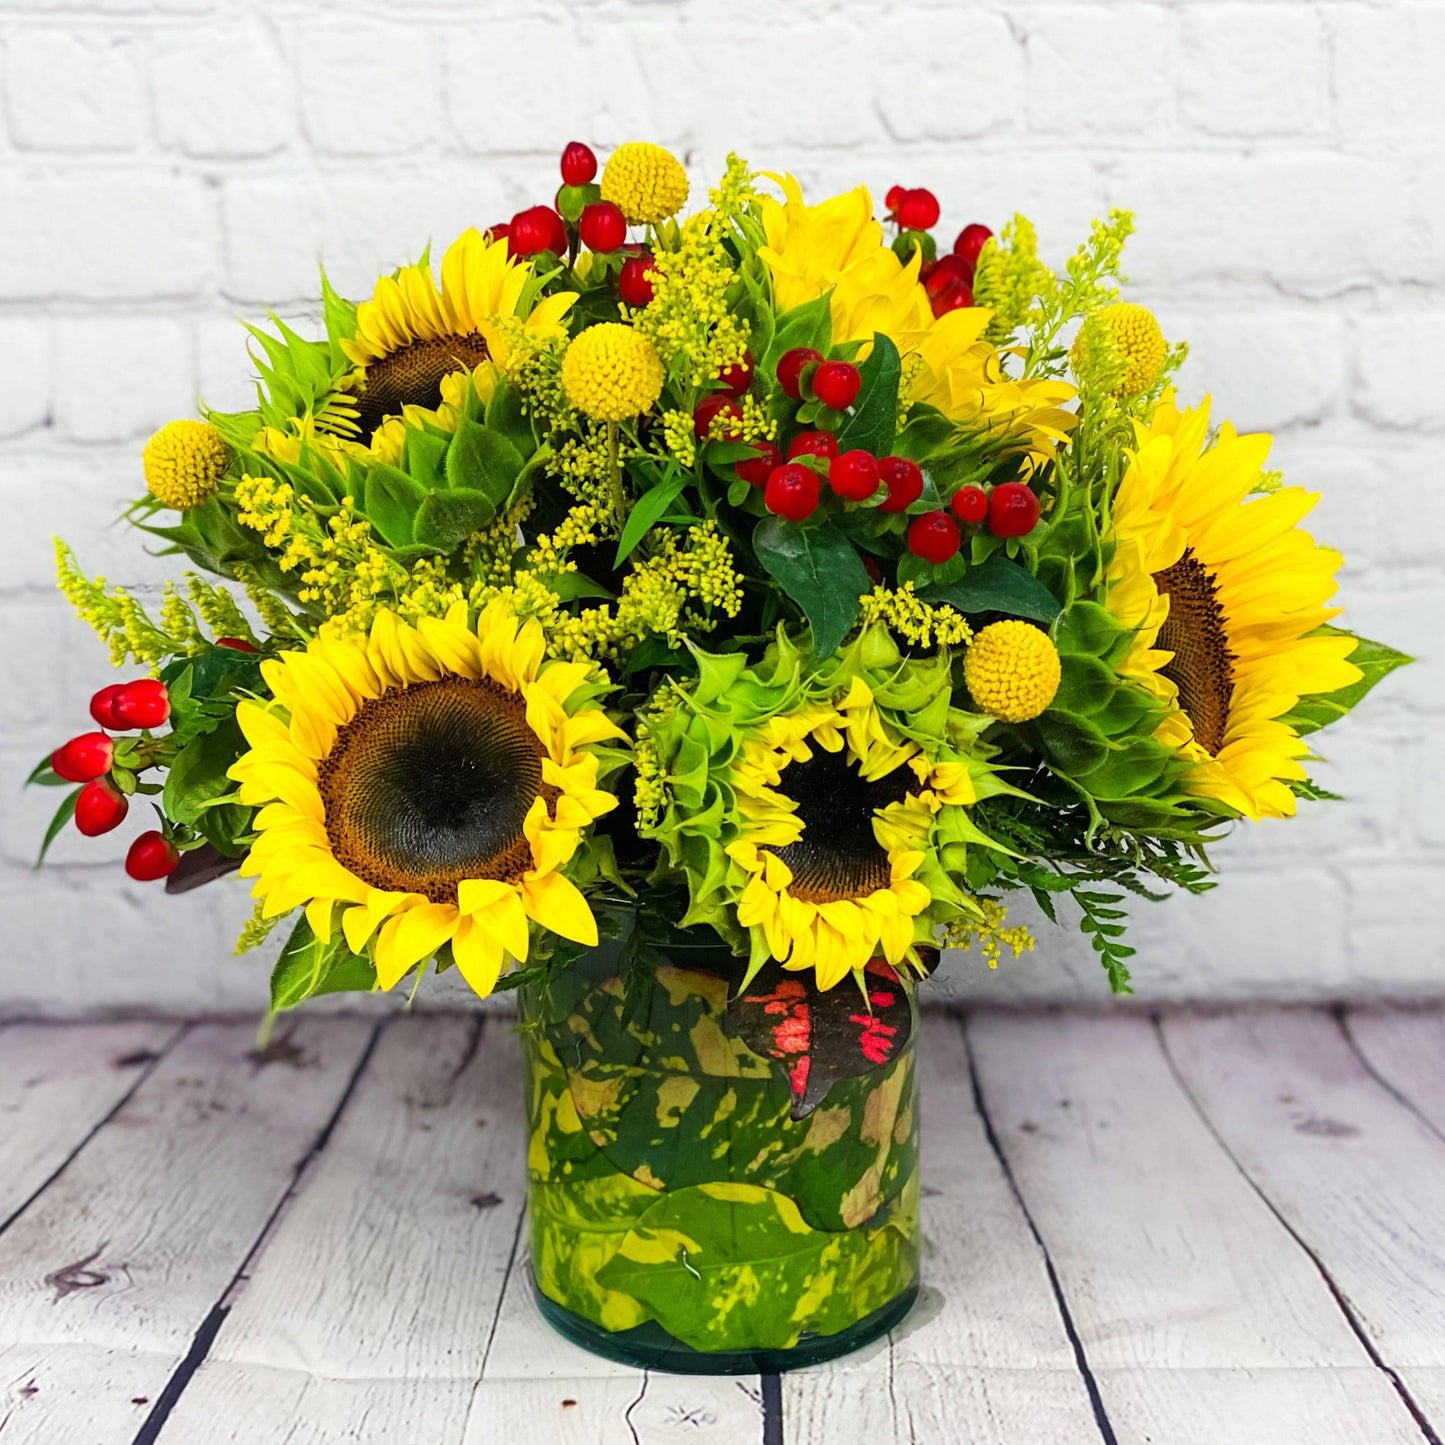 Sunny Sunflowers By DGM Flowers - DGM Flowers  | Fort Lauderdale Florist